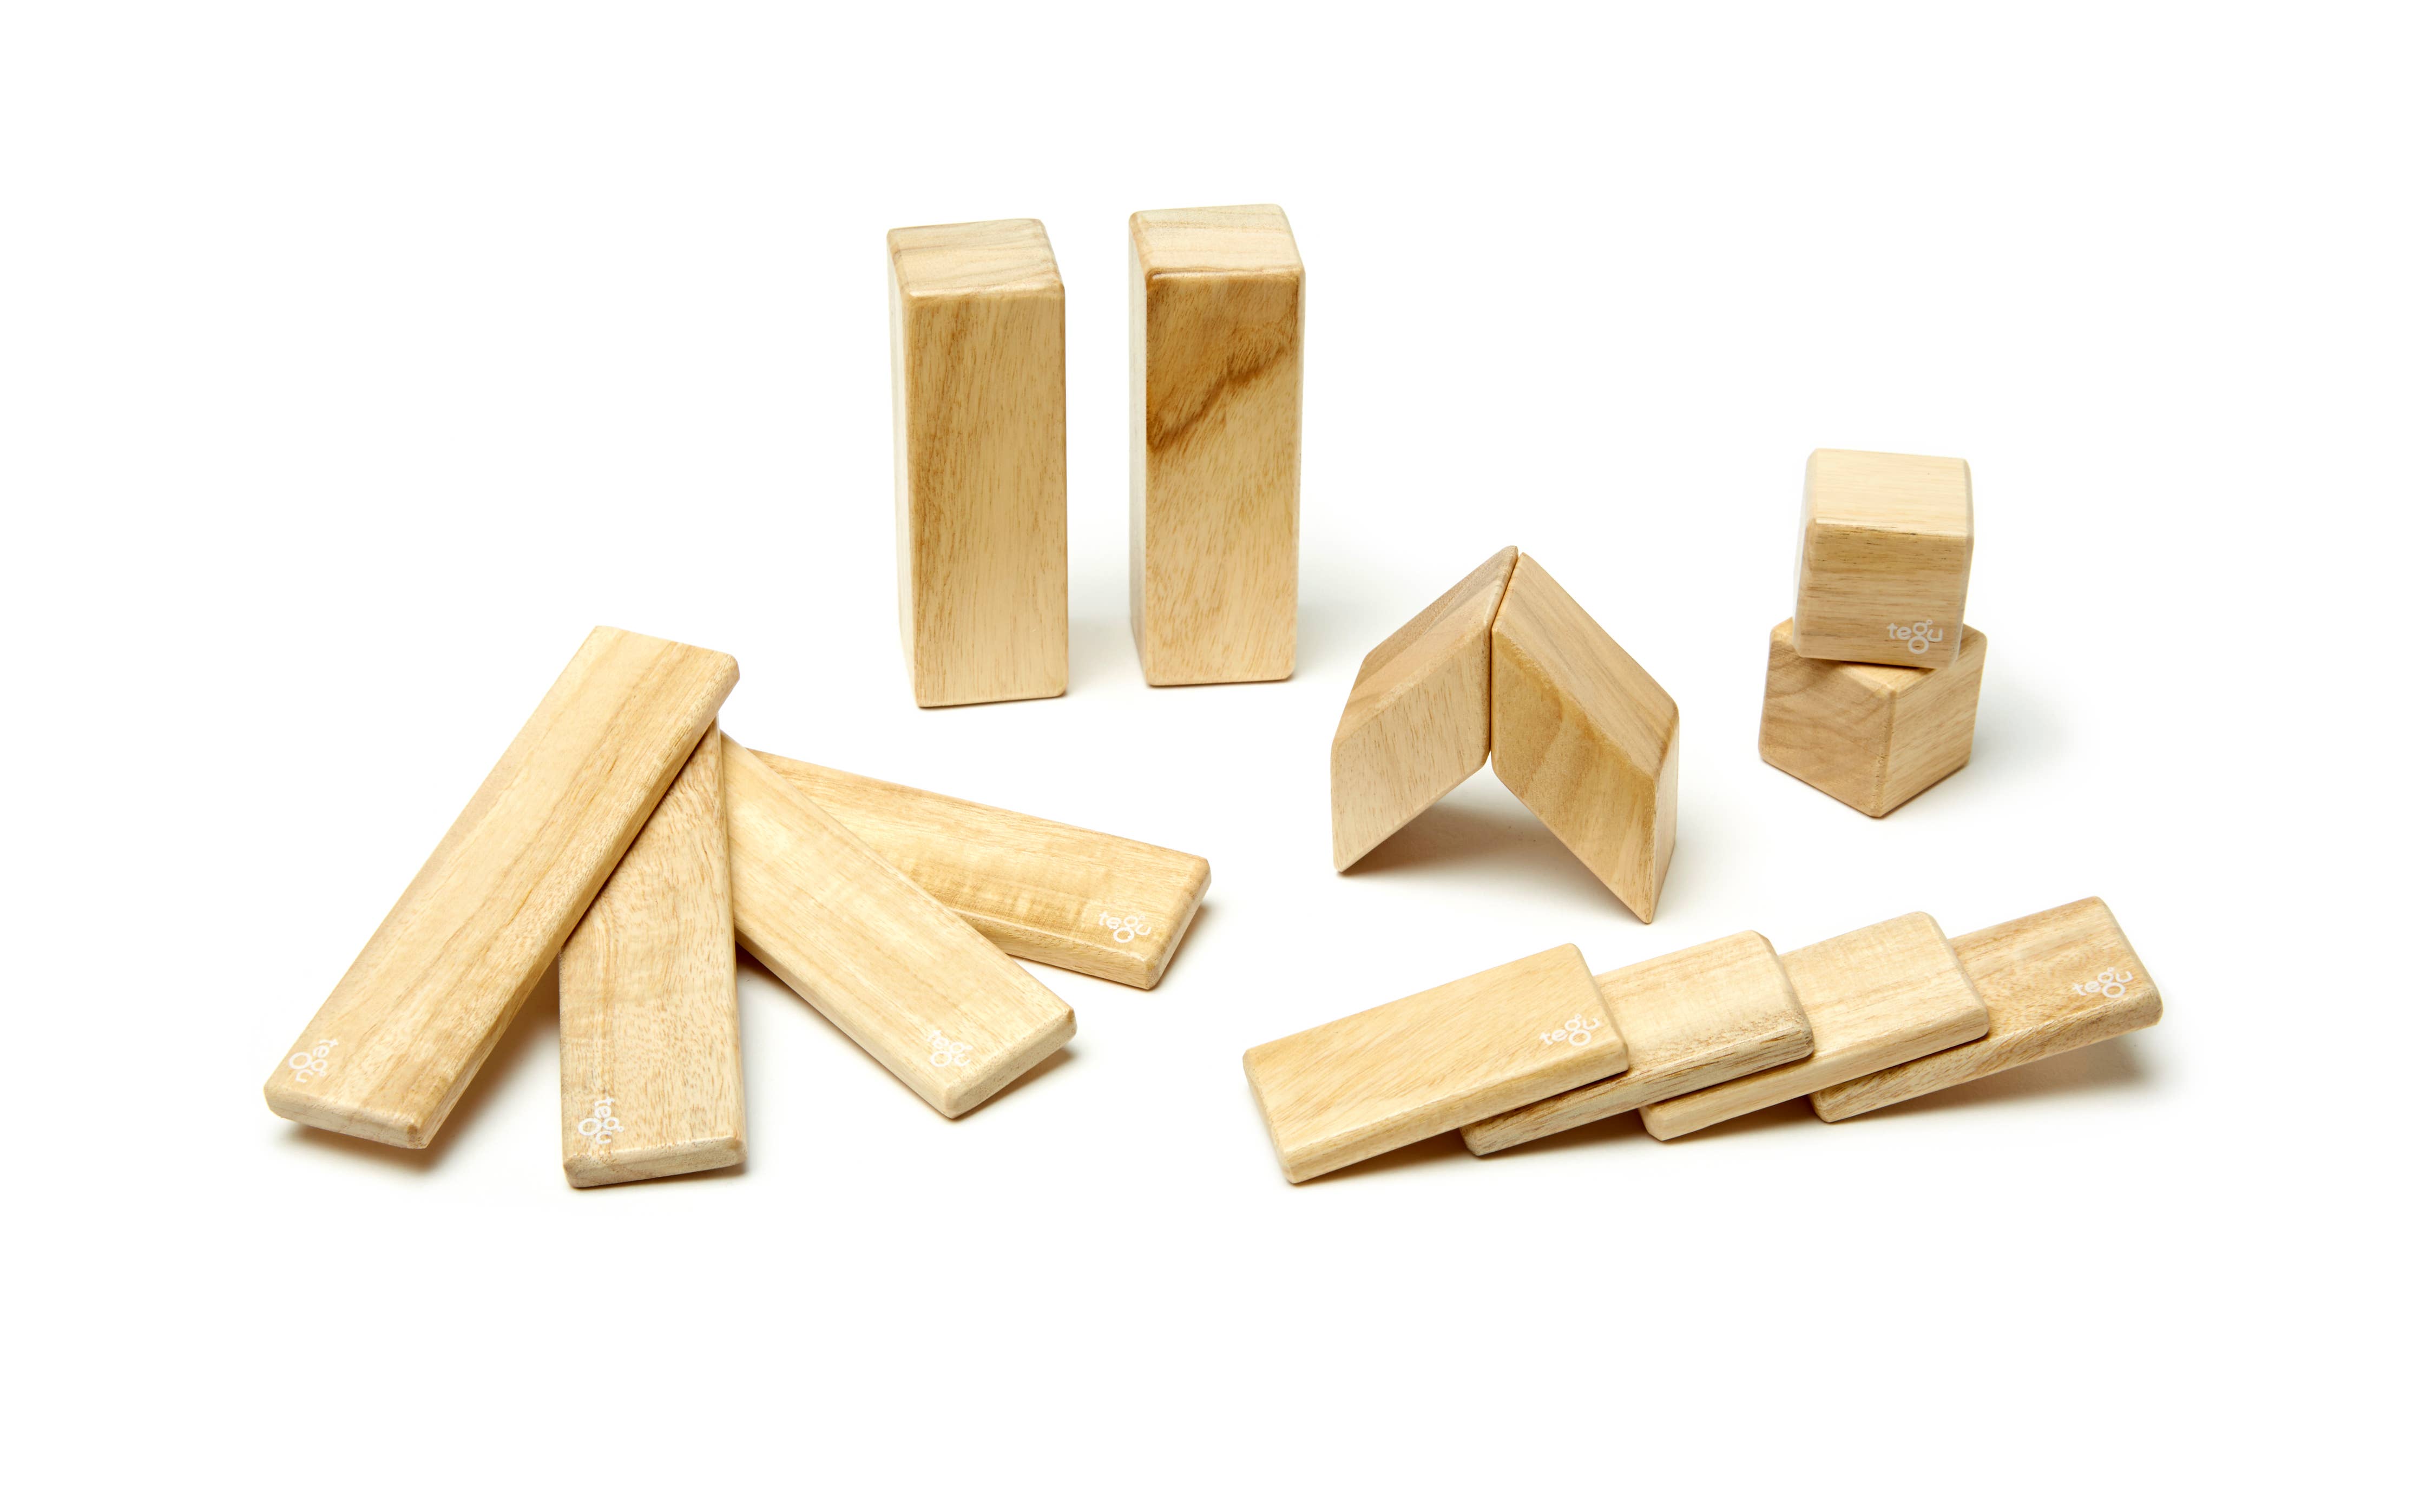 Tegu - 14 Piece Magnetic Wooden Block Set